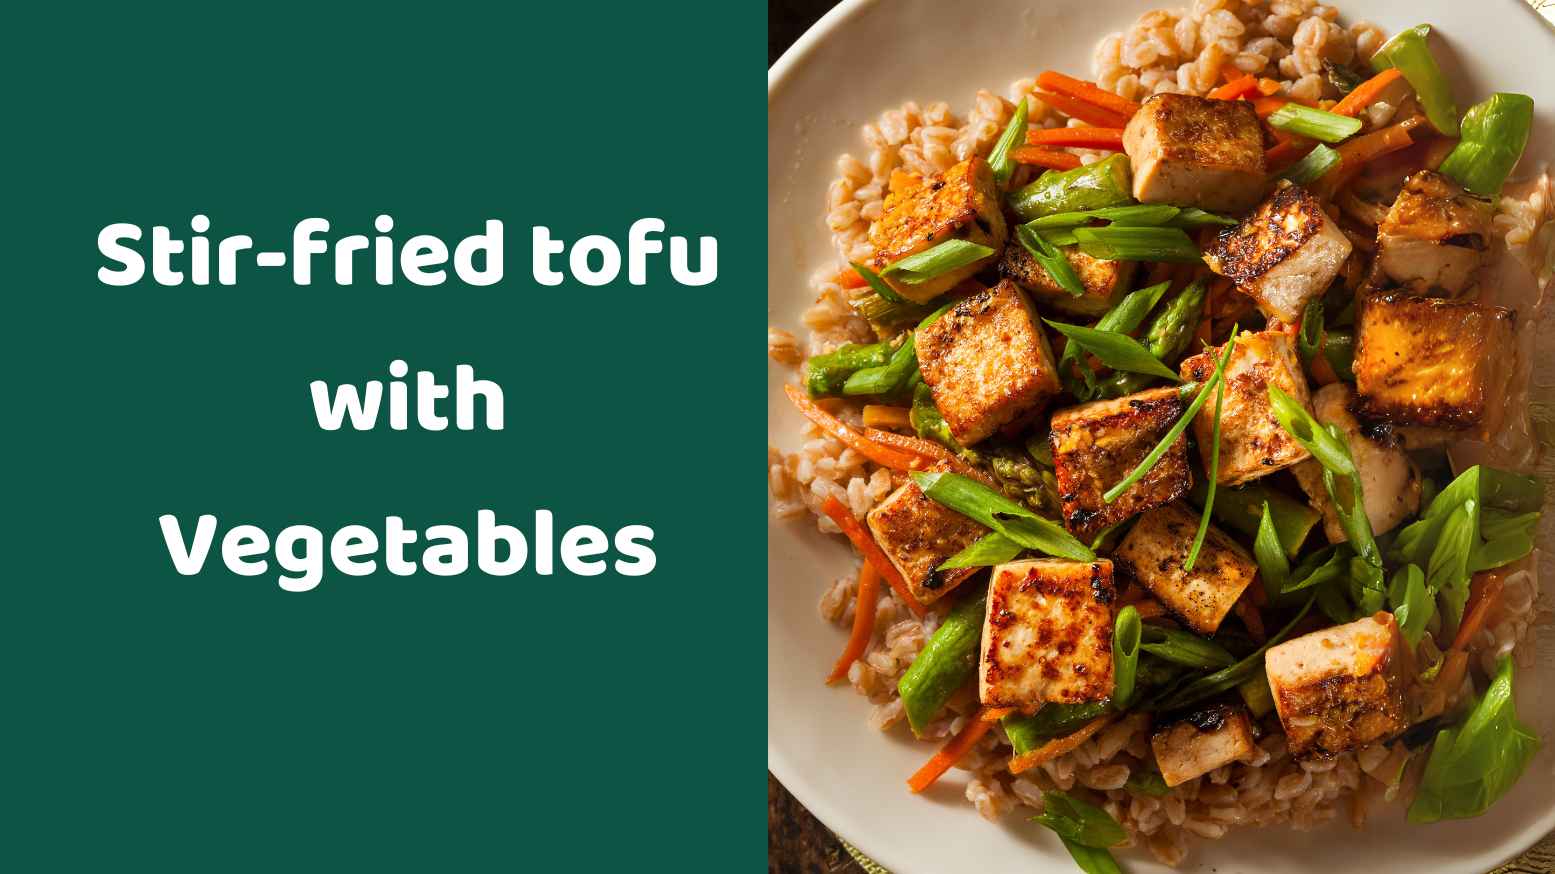 Stir-fried tofu with Vegetables